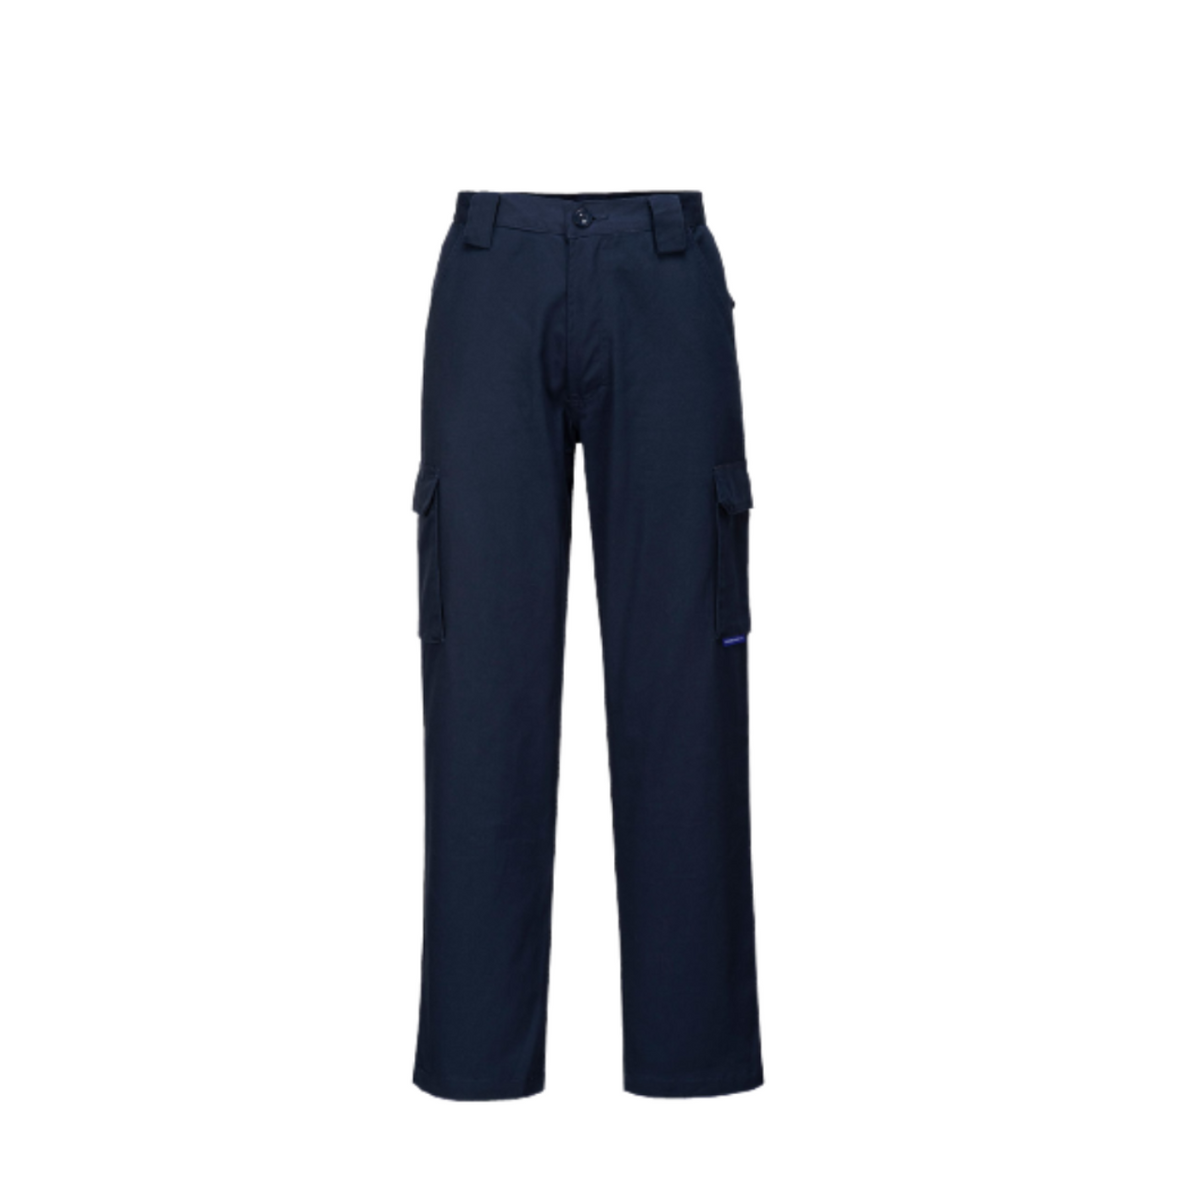 Portwest Flame Resistant Cargo Pants 100% Cotton Cargo Pant Comfortable MW700-Collins Clothing Co